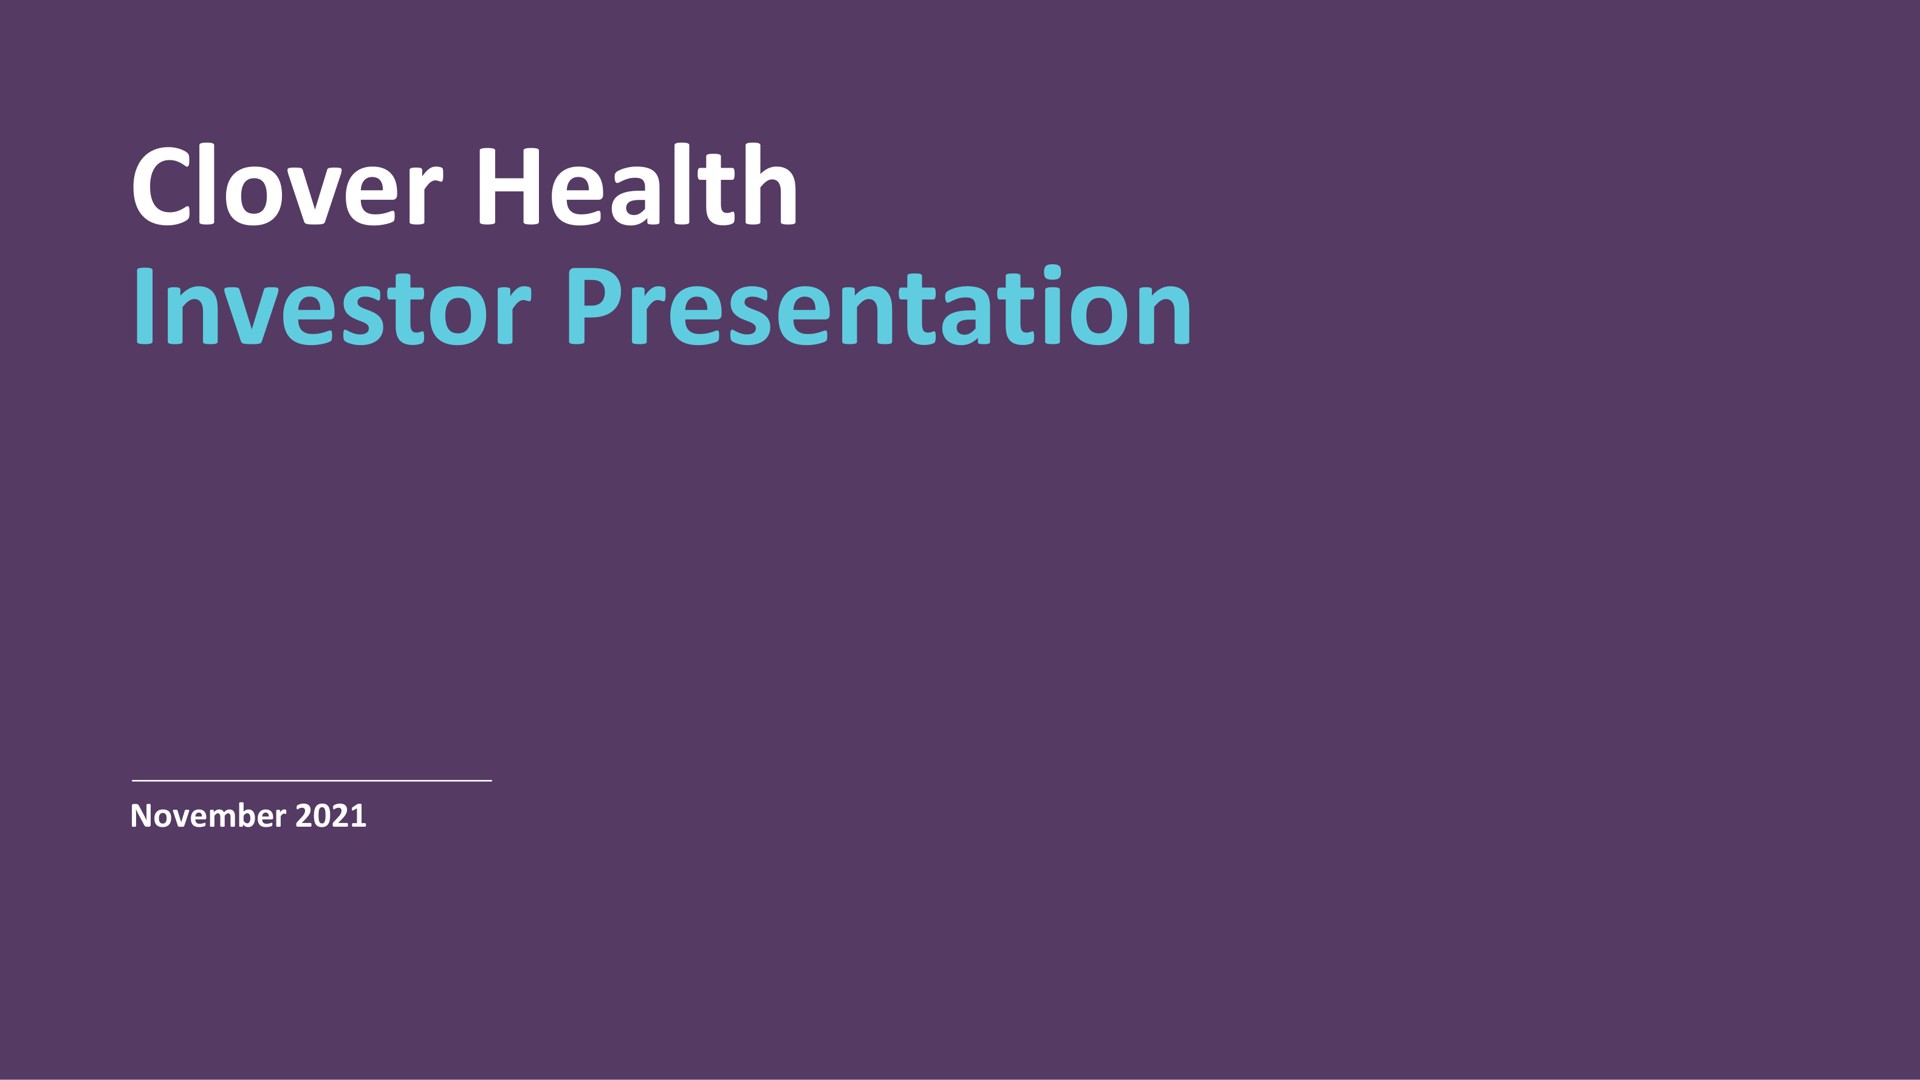 clover health investor presentation | Clover Health